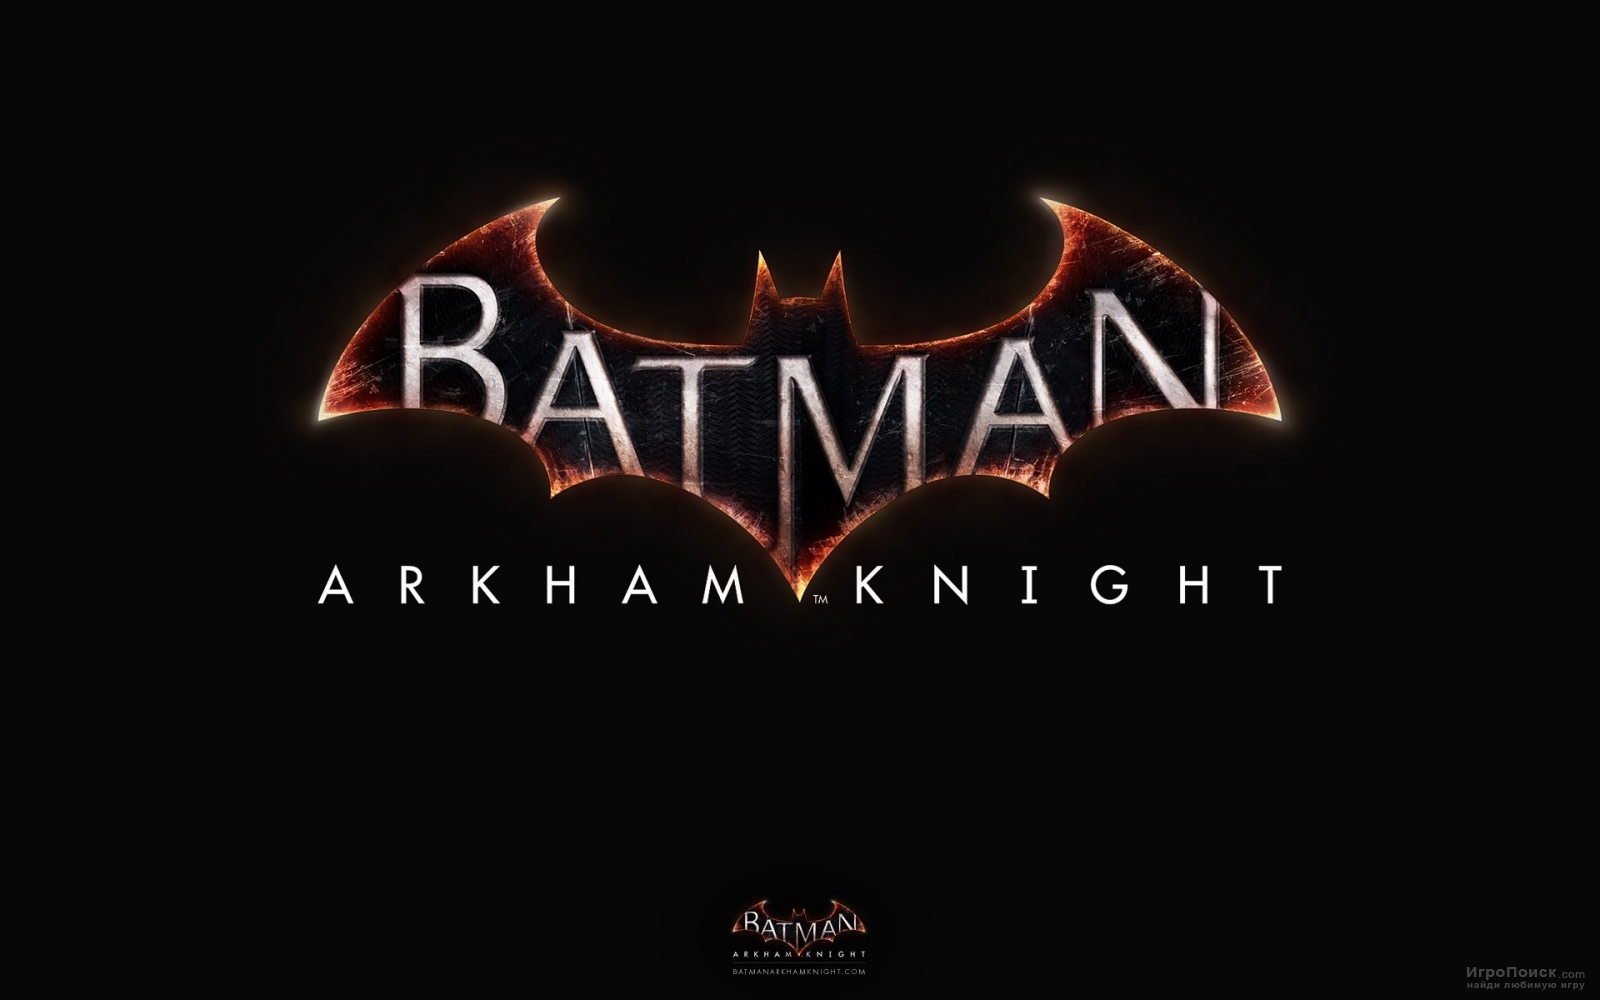      Batman: Arkham Knight